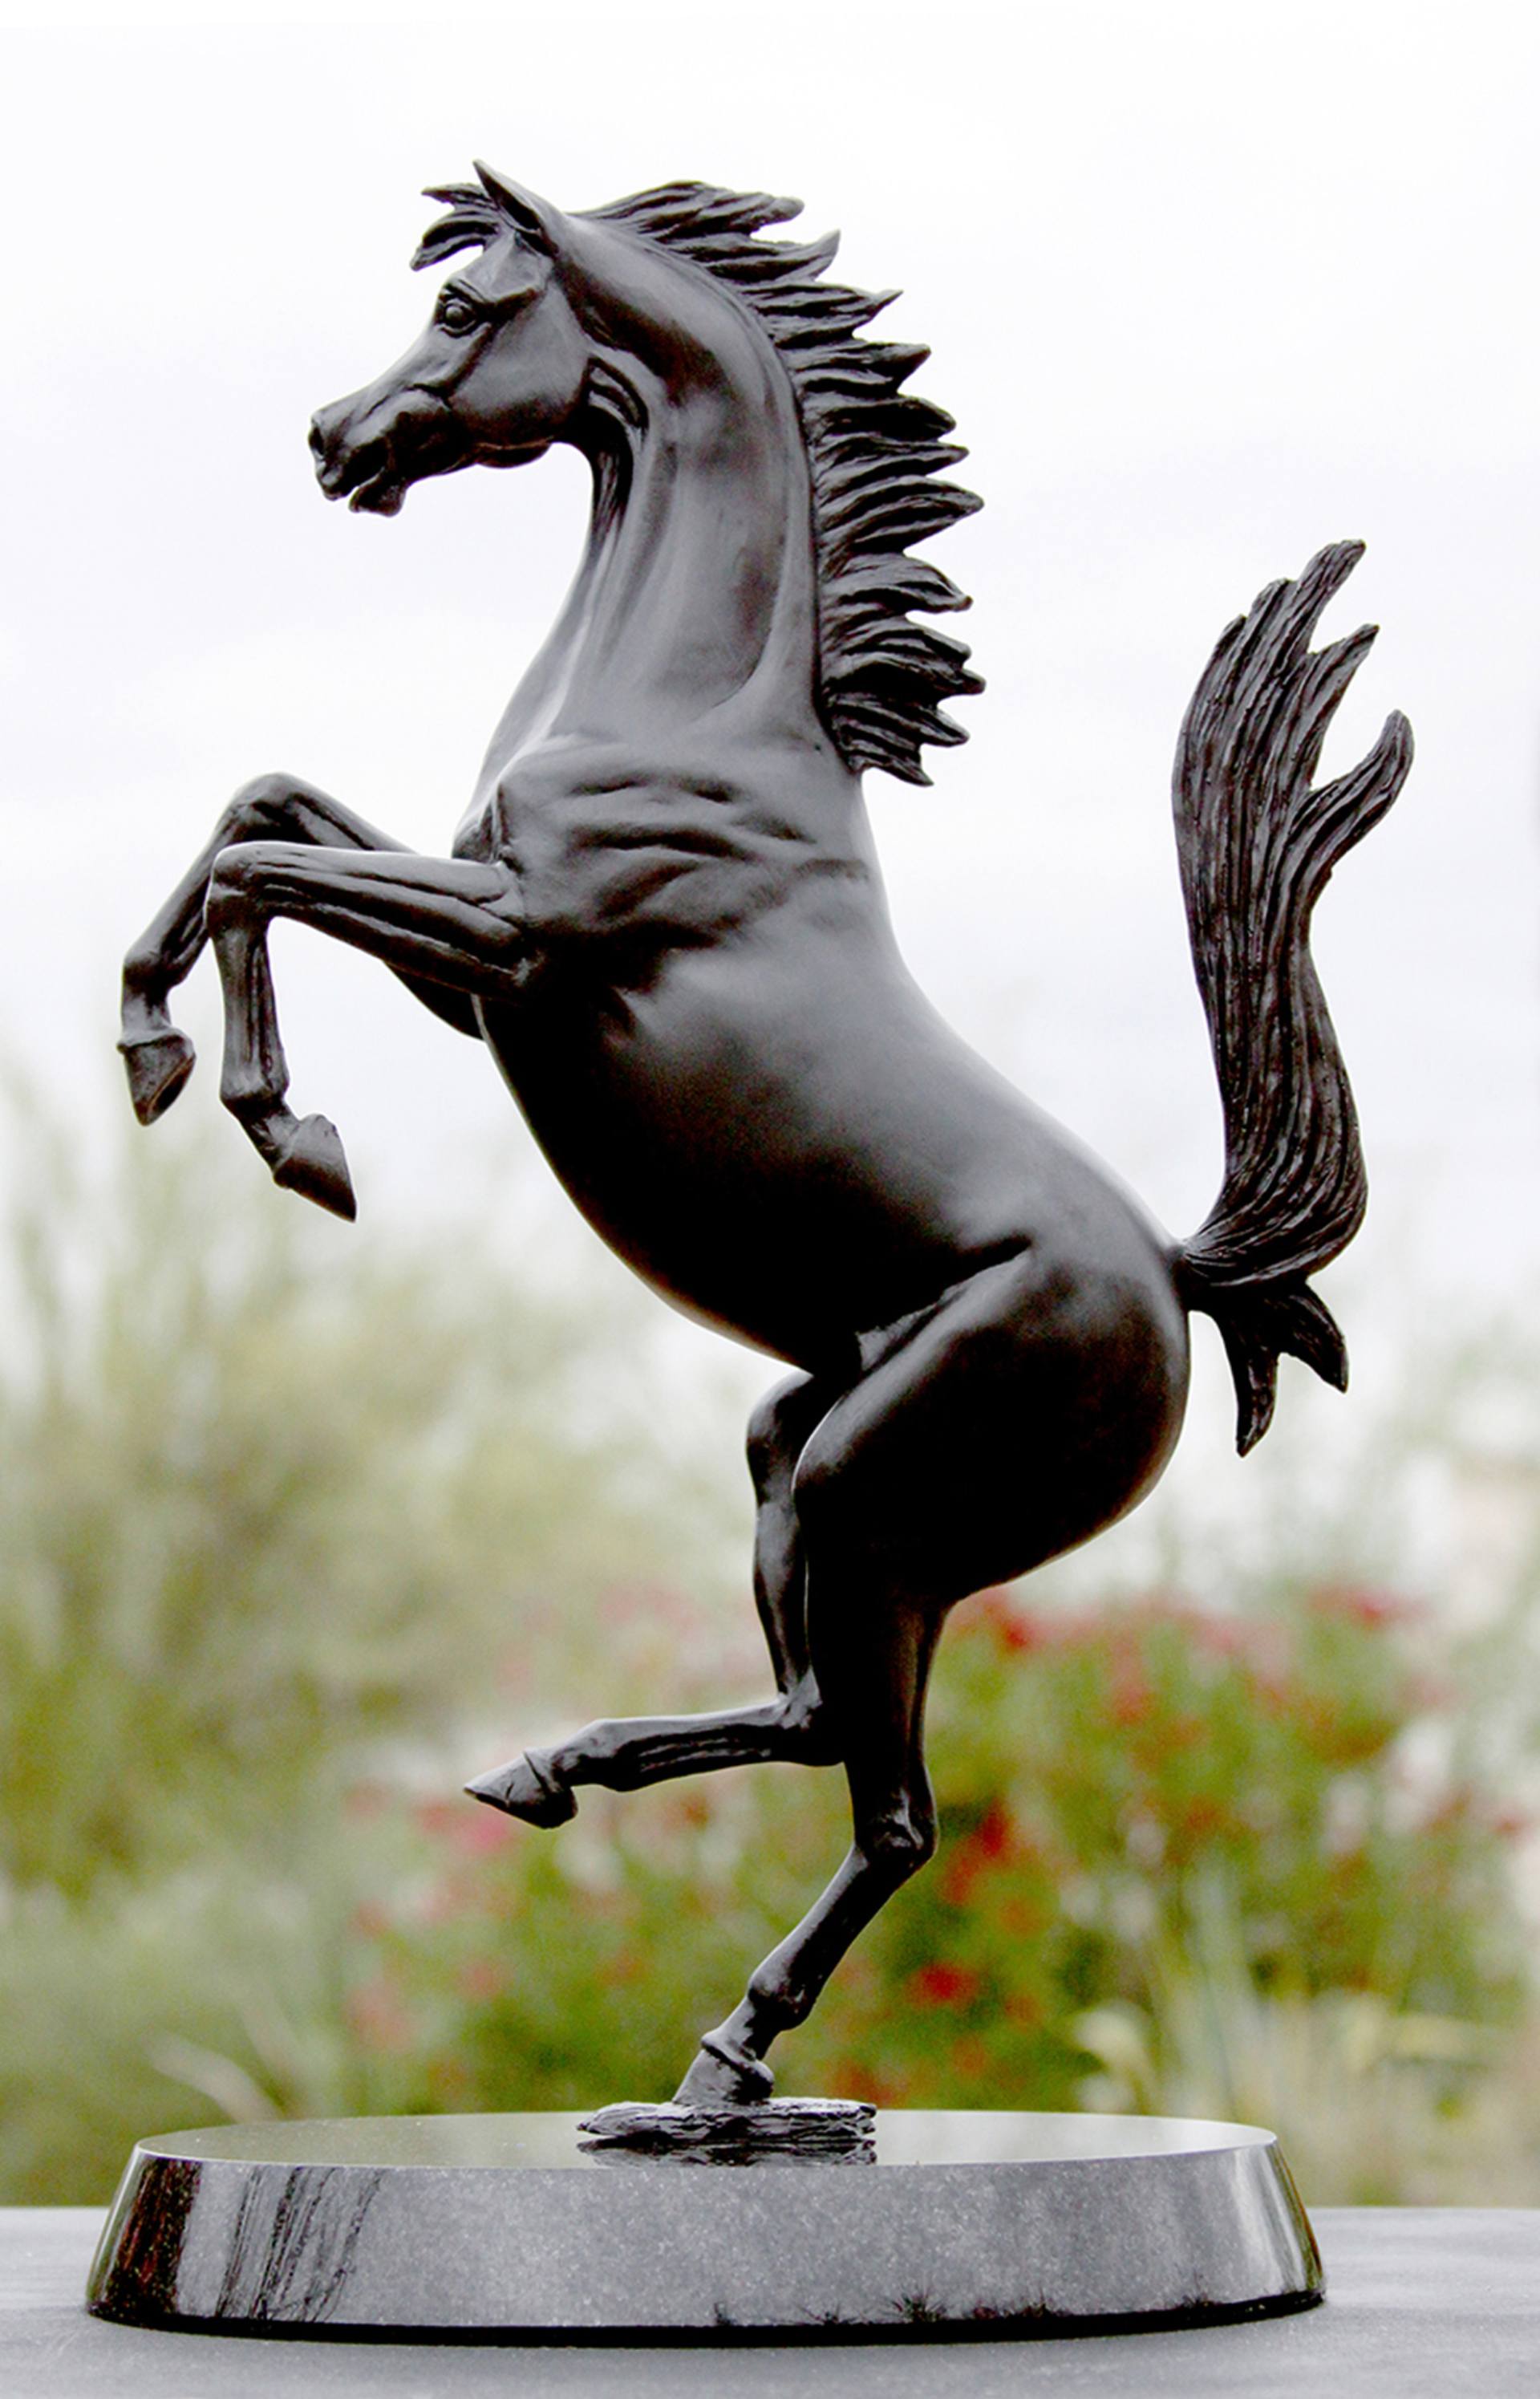 Saatchi Art: Cavallino Rampante Prancing Horse Bronze Sculpture ...